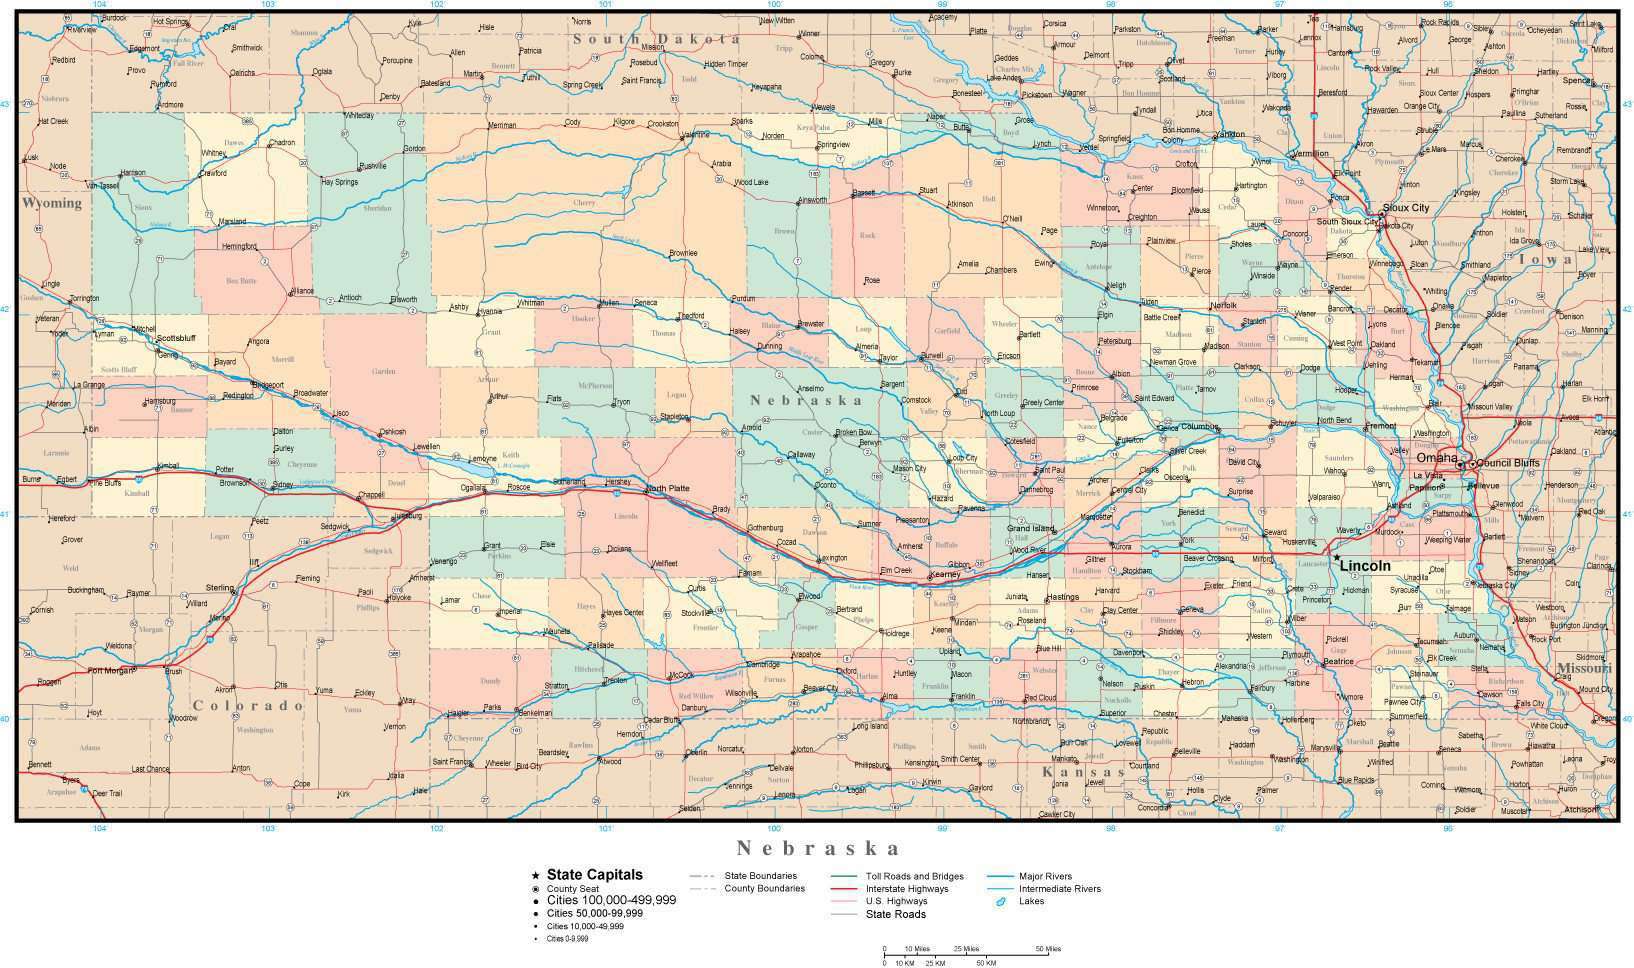 nebraska-adobe-illustrator-map-with-counties-cities-county-seats